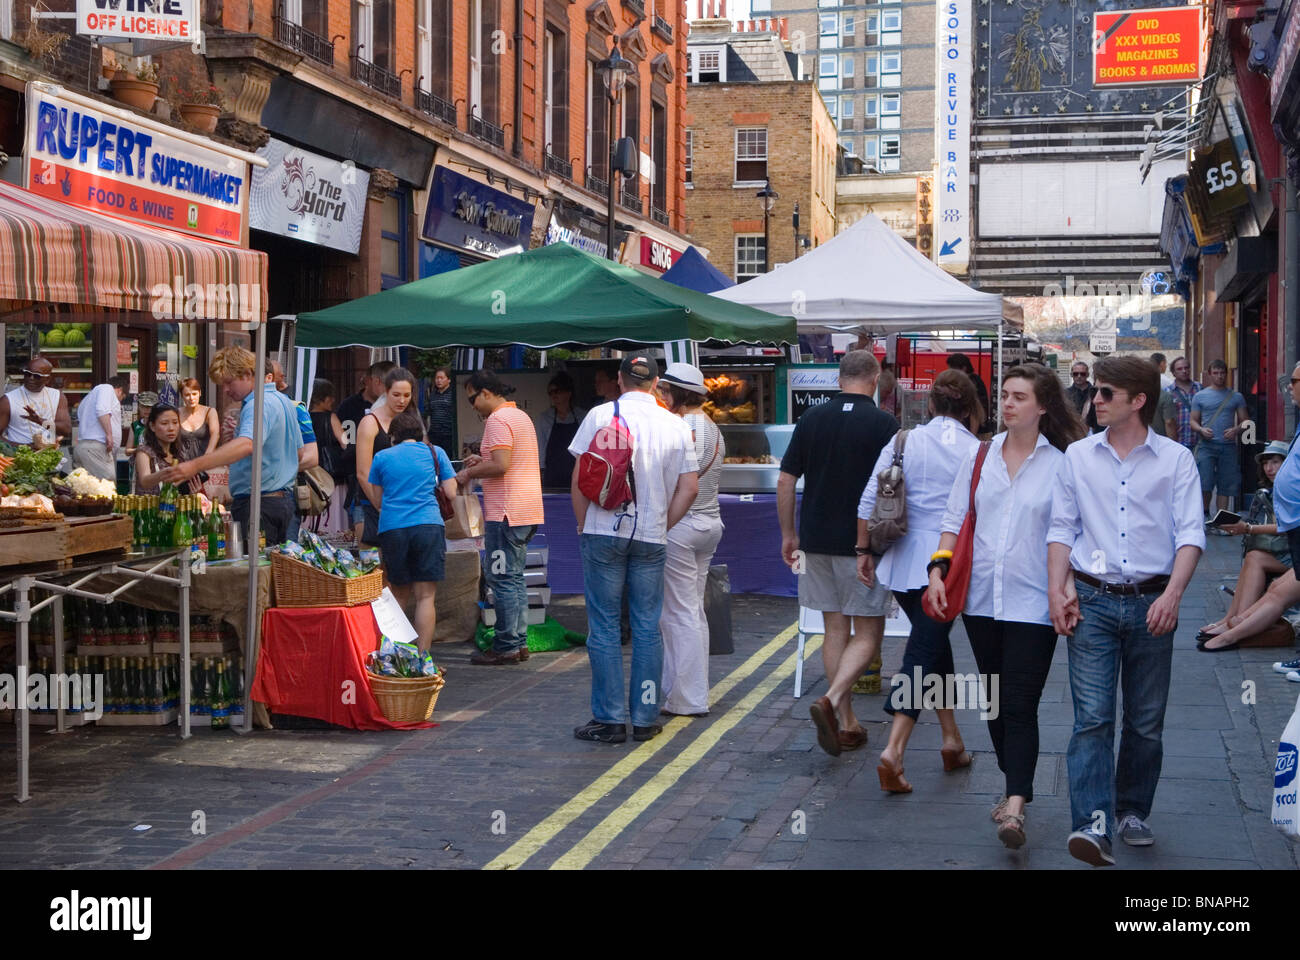 Farmers Market. Rupert Street Soho. London Uk. HOMER SYKES Stock Photo